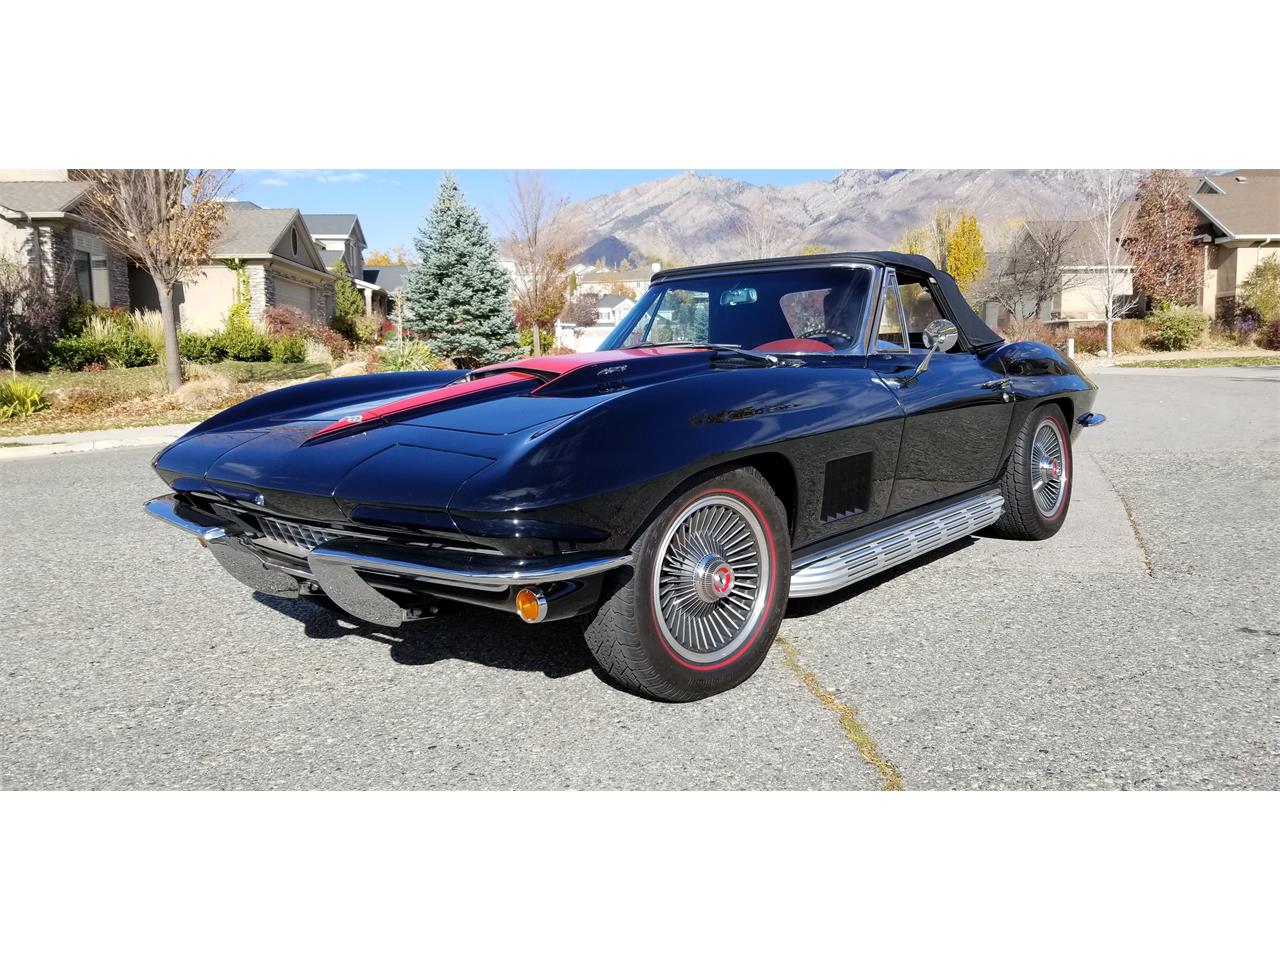 For Sale at Auction: 1967 Chevrolet Corvette for sale in Billings, MT